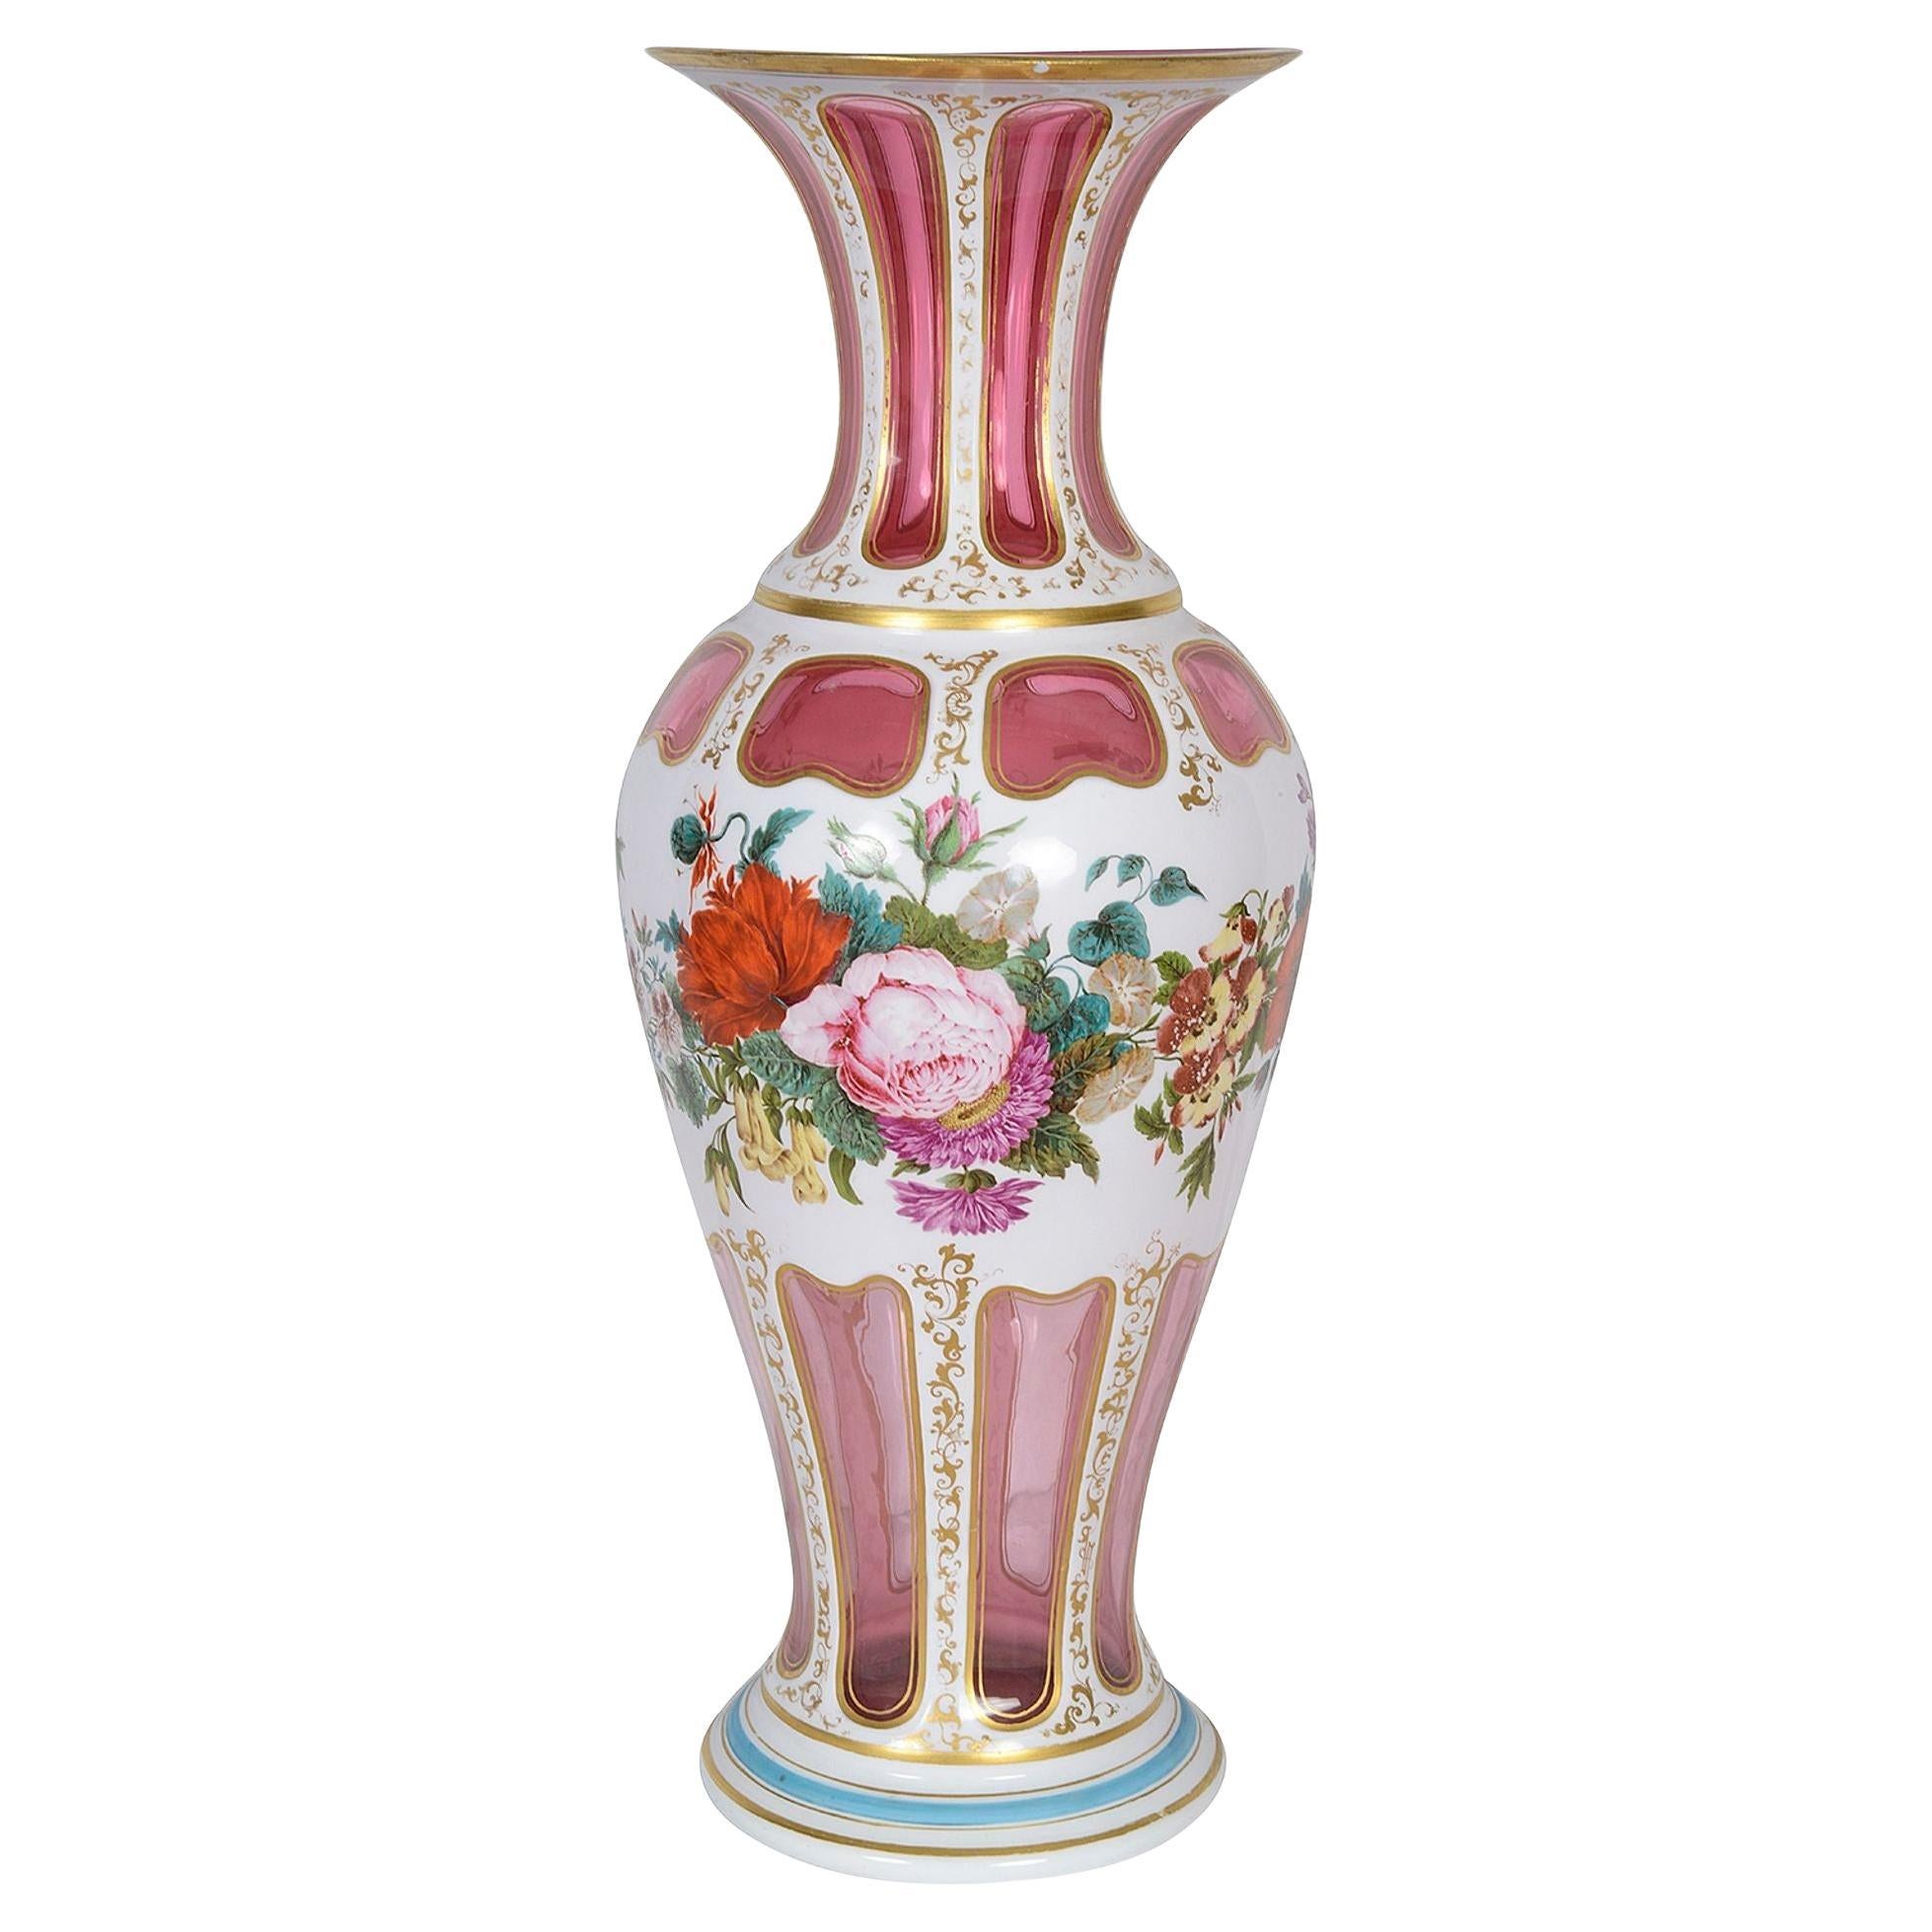 Bohemian Opaline glass vase, circa 1880.